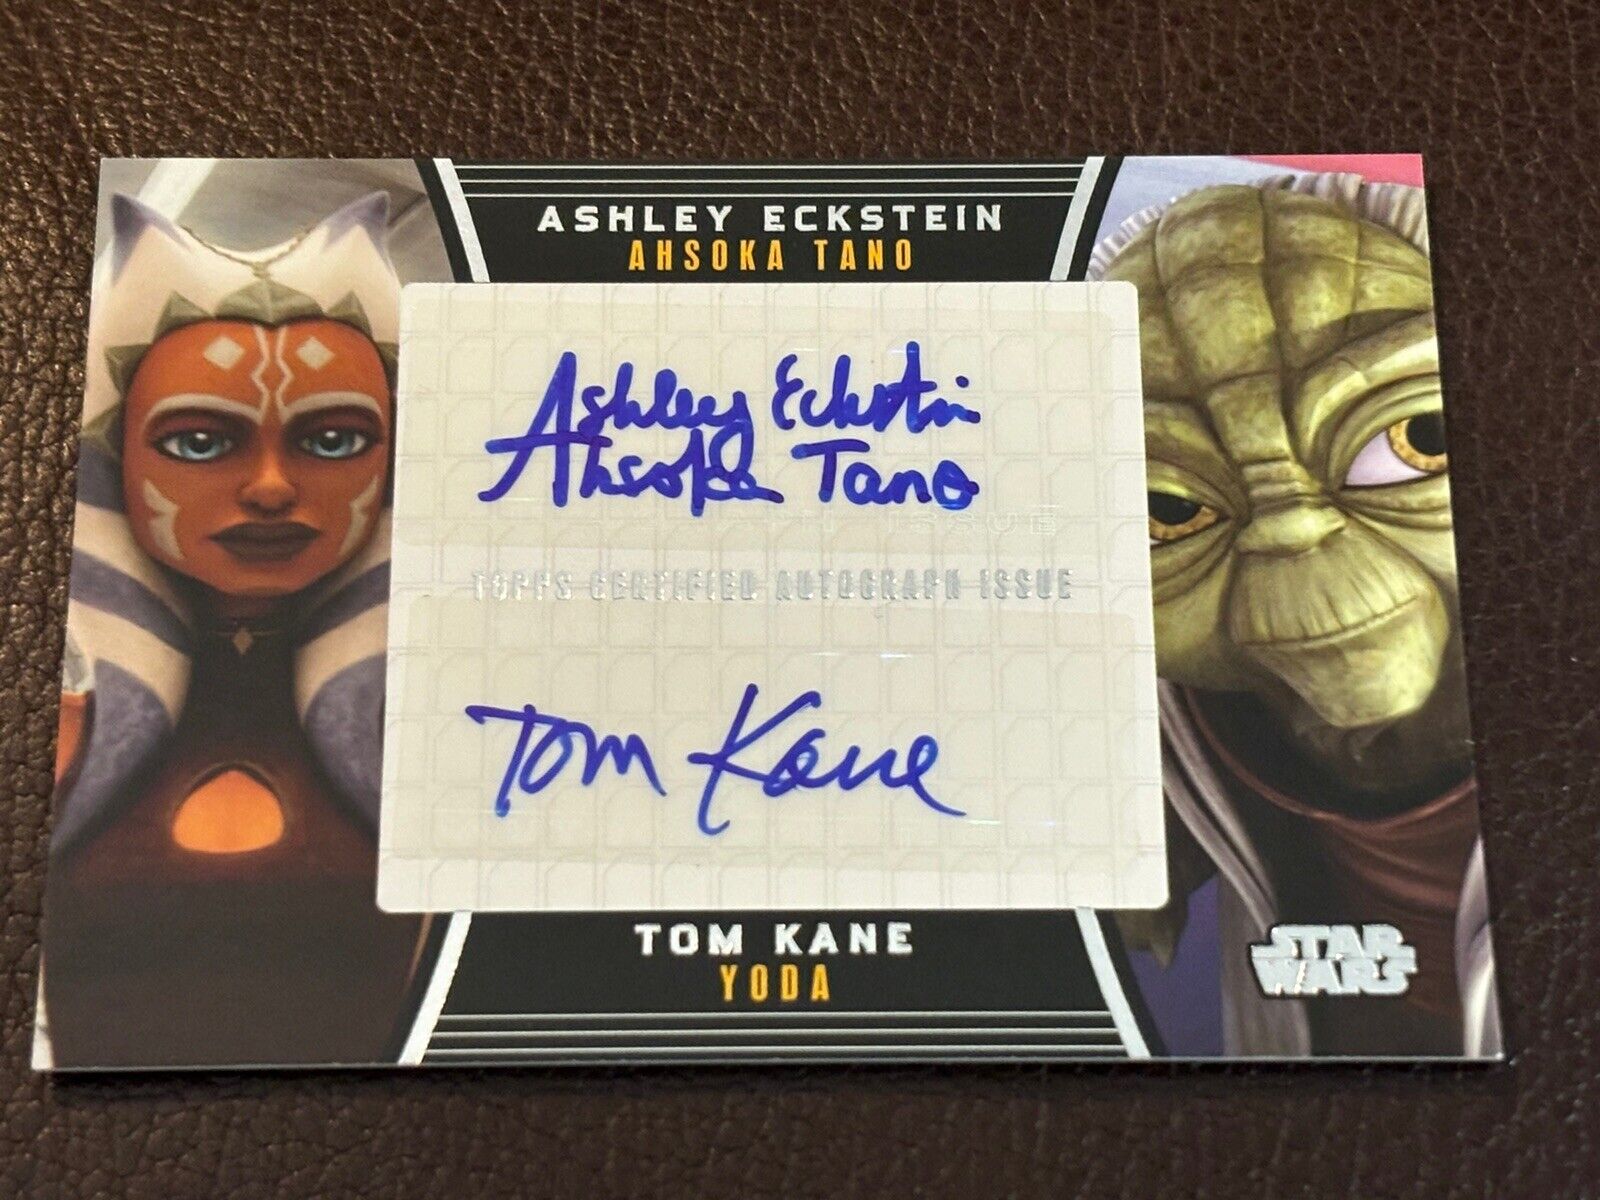 2013 Topps Star Wars Galactic Files Ashely Eckstein Tom Kane Dual Autograph Auto